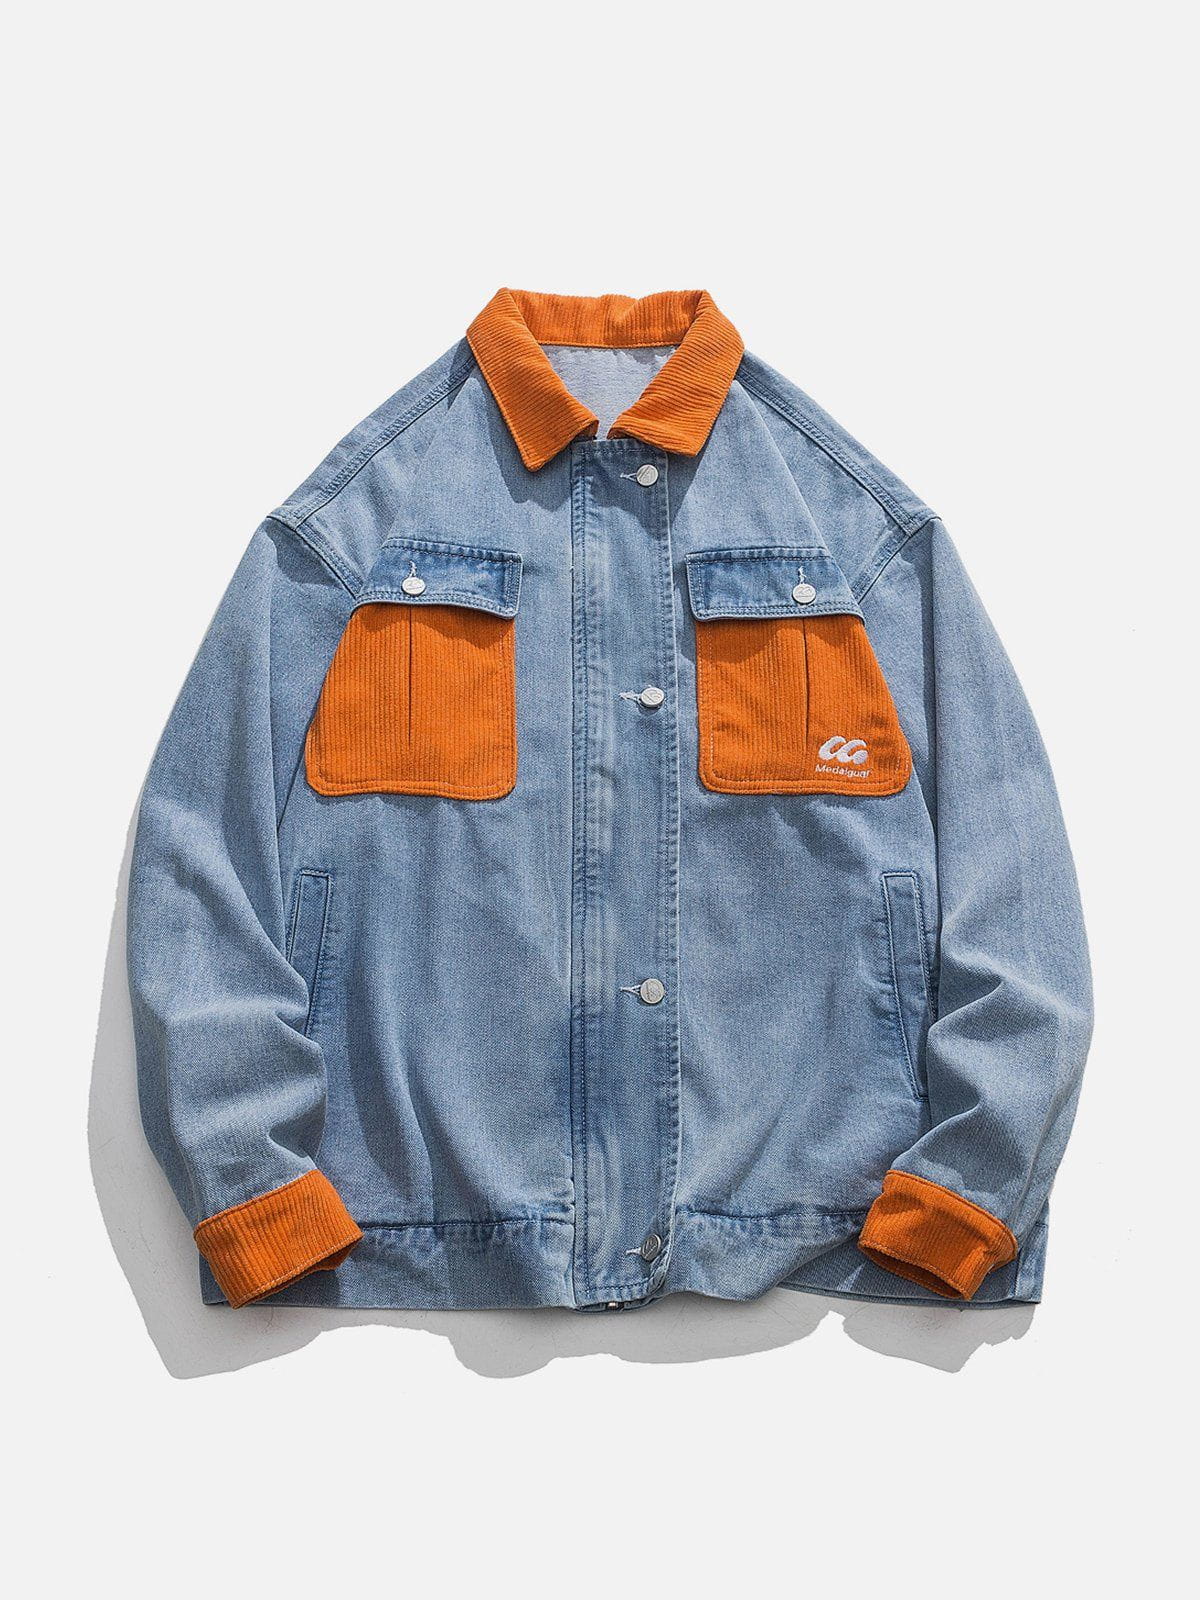 Majesda® - Orange Corduroy Patchwork Denim Jacket